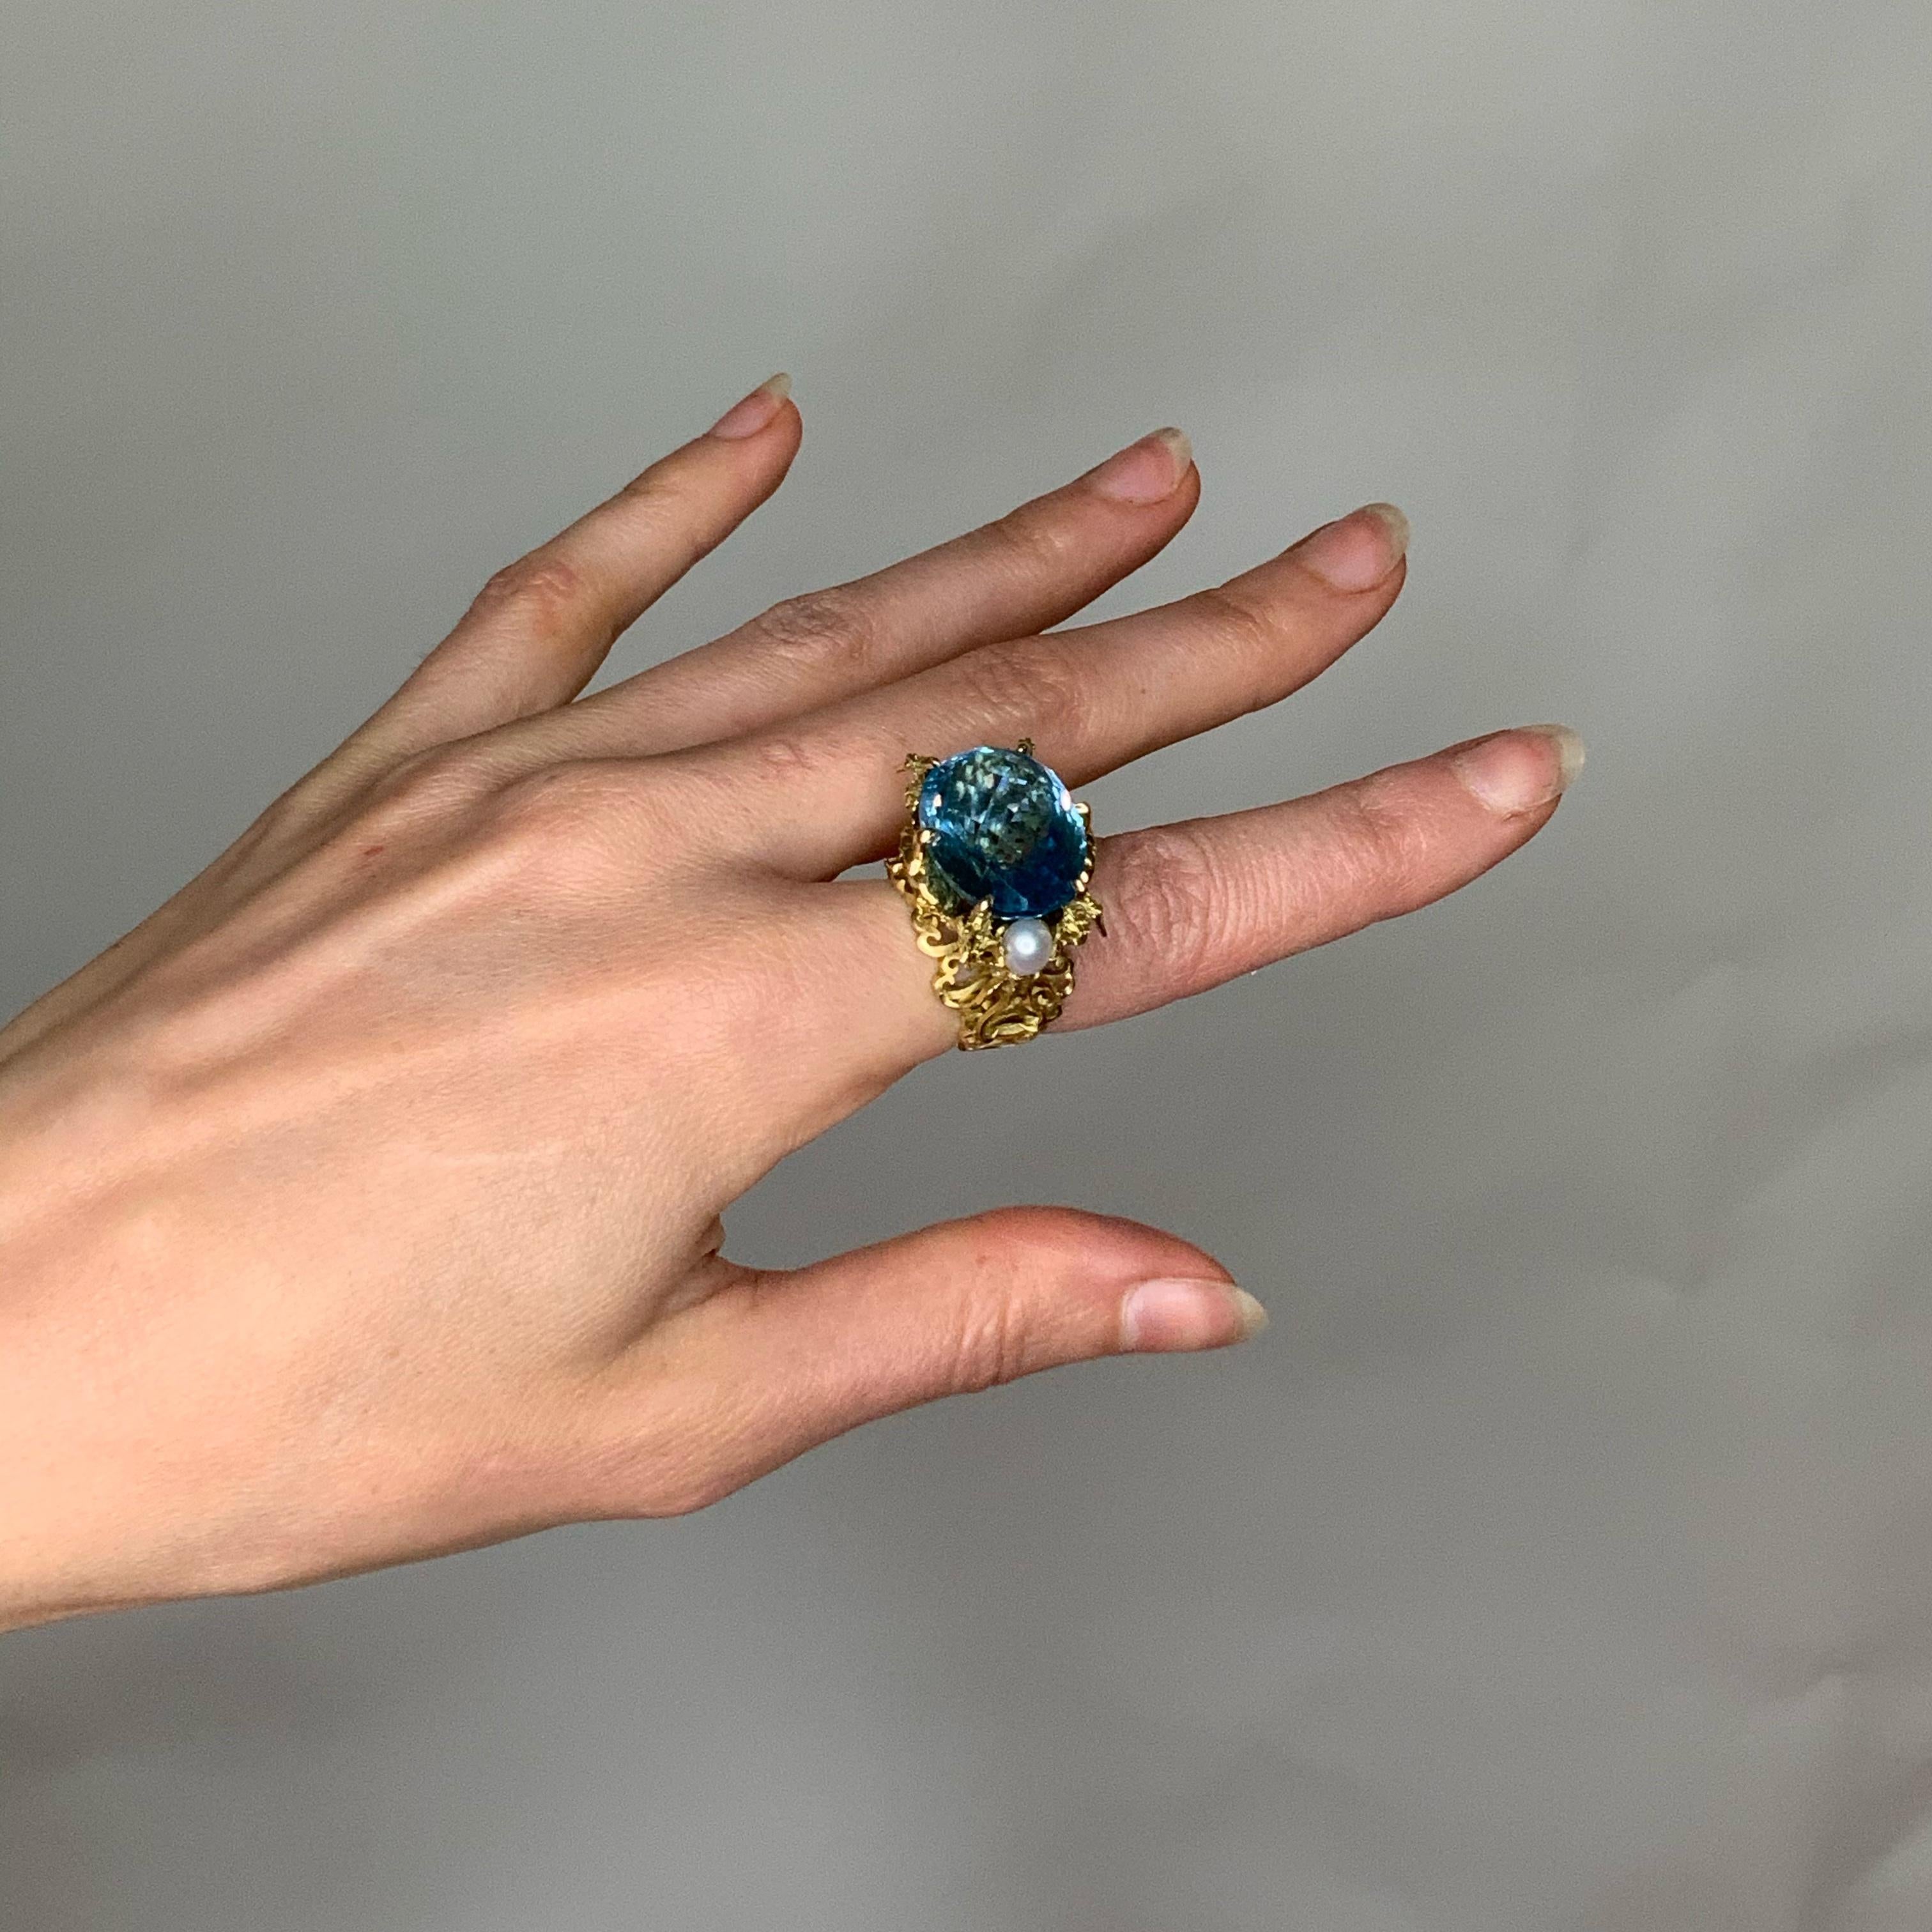 Kraken Ring 18 Karat Yellow Gold with Swiss Blue Topaz, Diamonds and Pearls 6